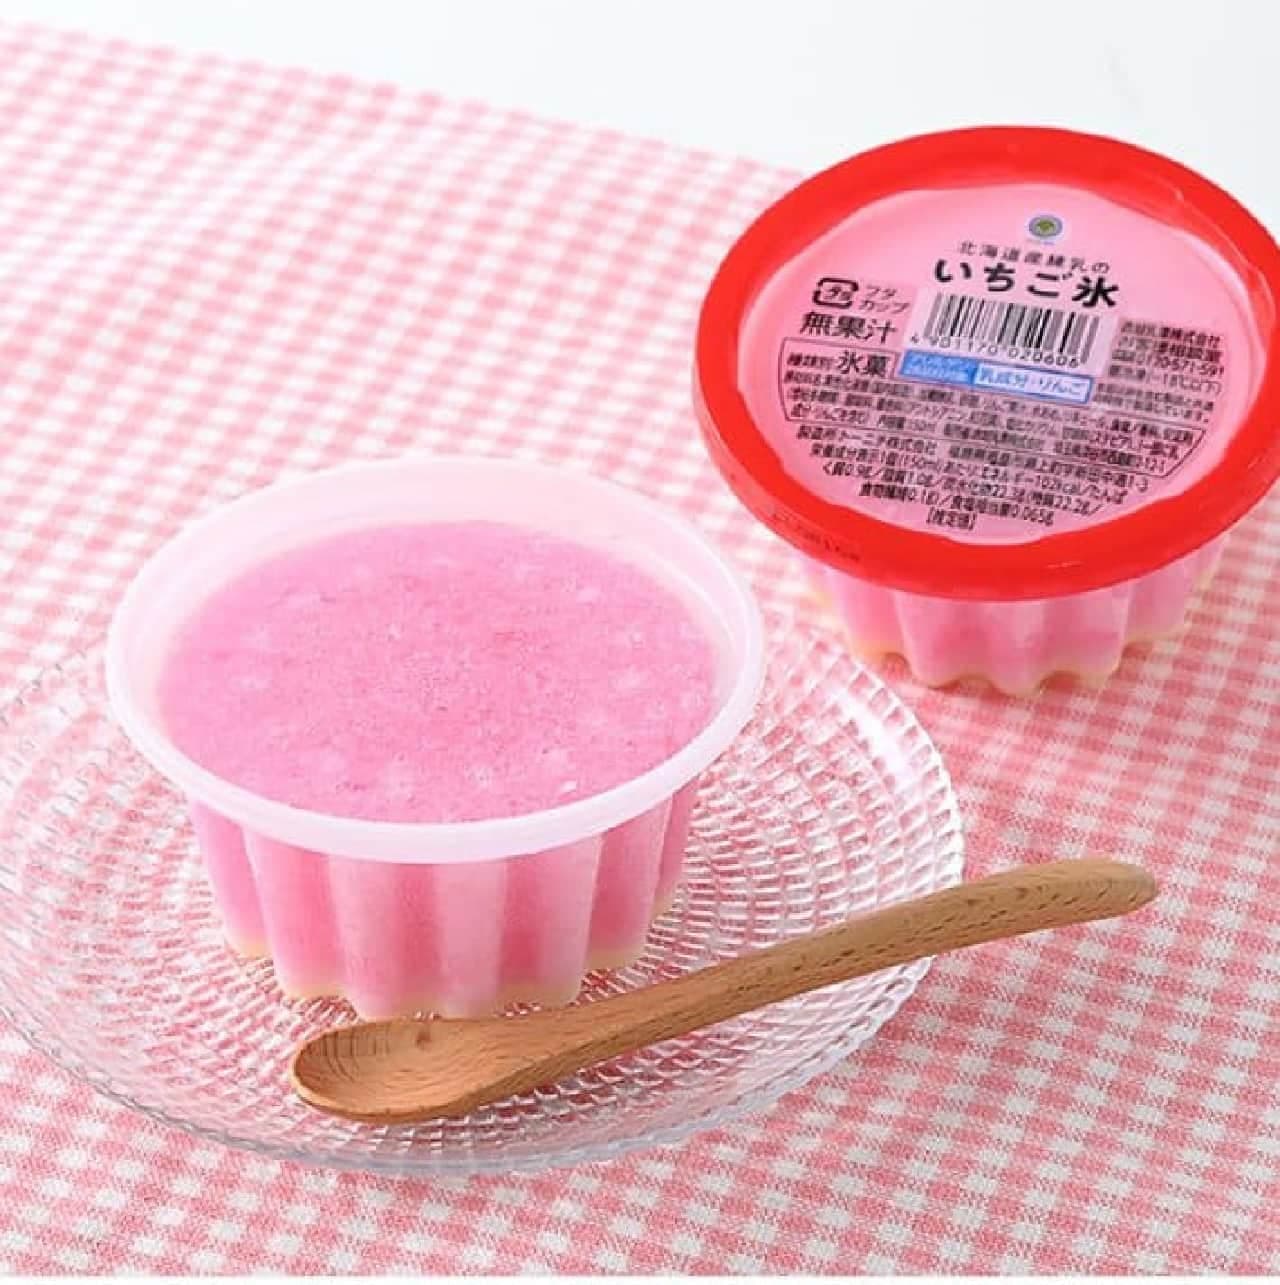 FamilyMart "Strawberry Ice Cup with Hokkaido Condensed Milk